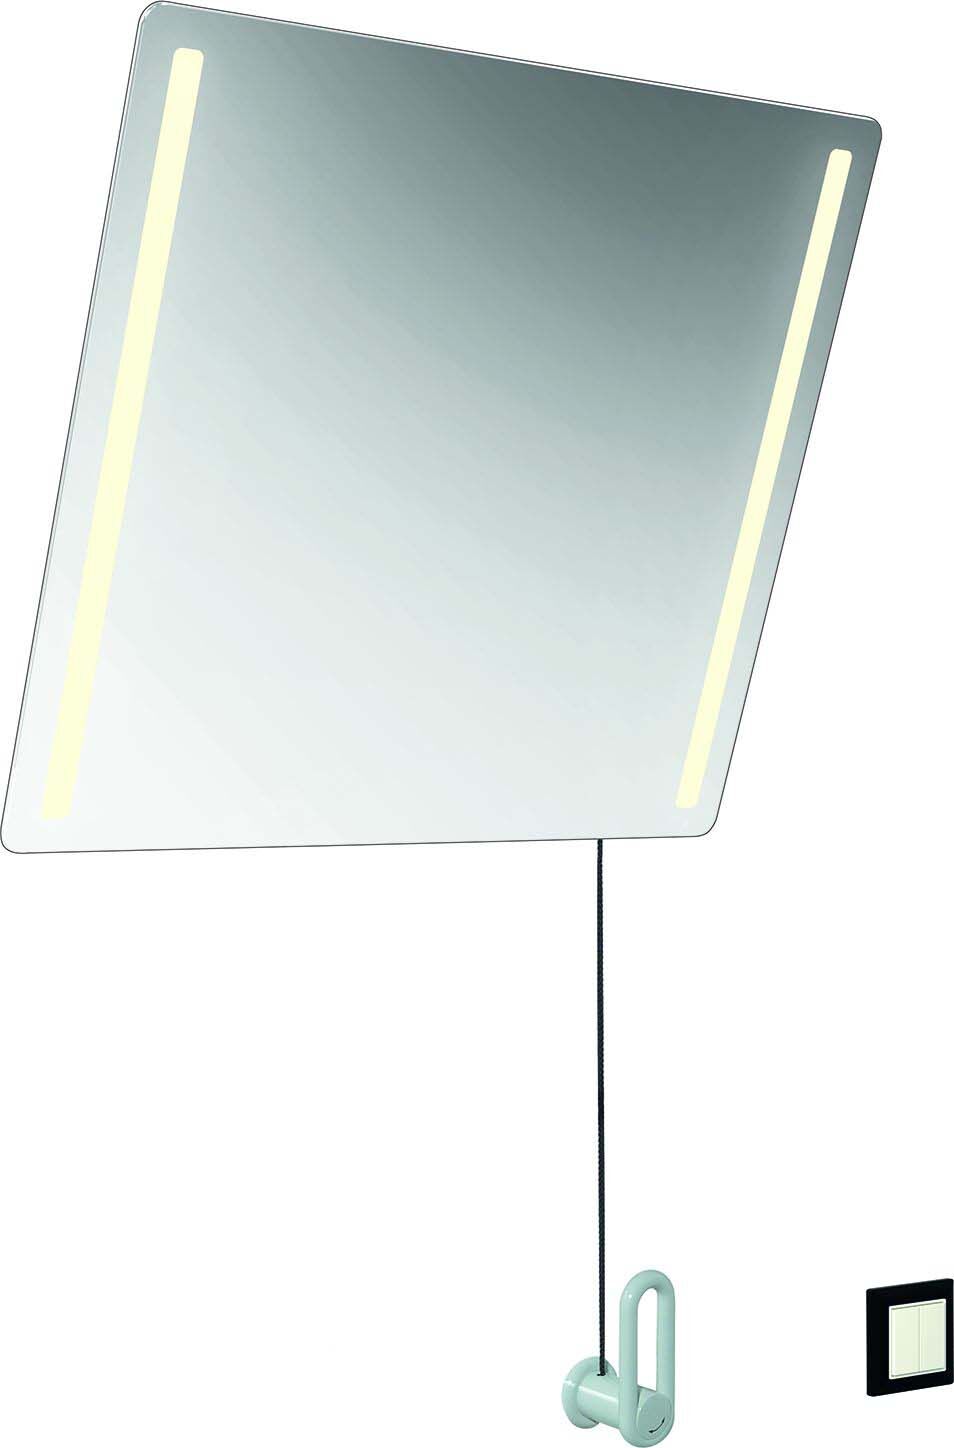 Hewi 801 Kipp-Lichtspiegel LED 801.01.40192 600x540x6mm, anthrazitgrau